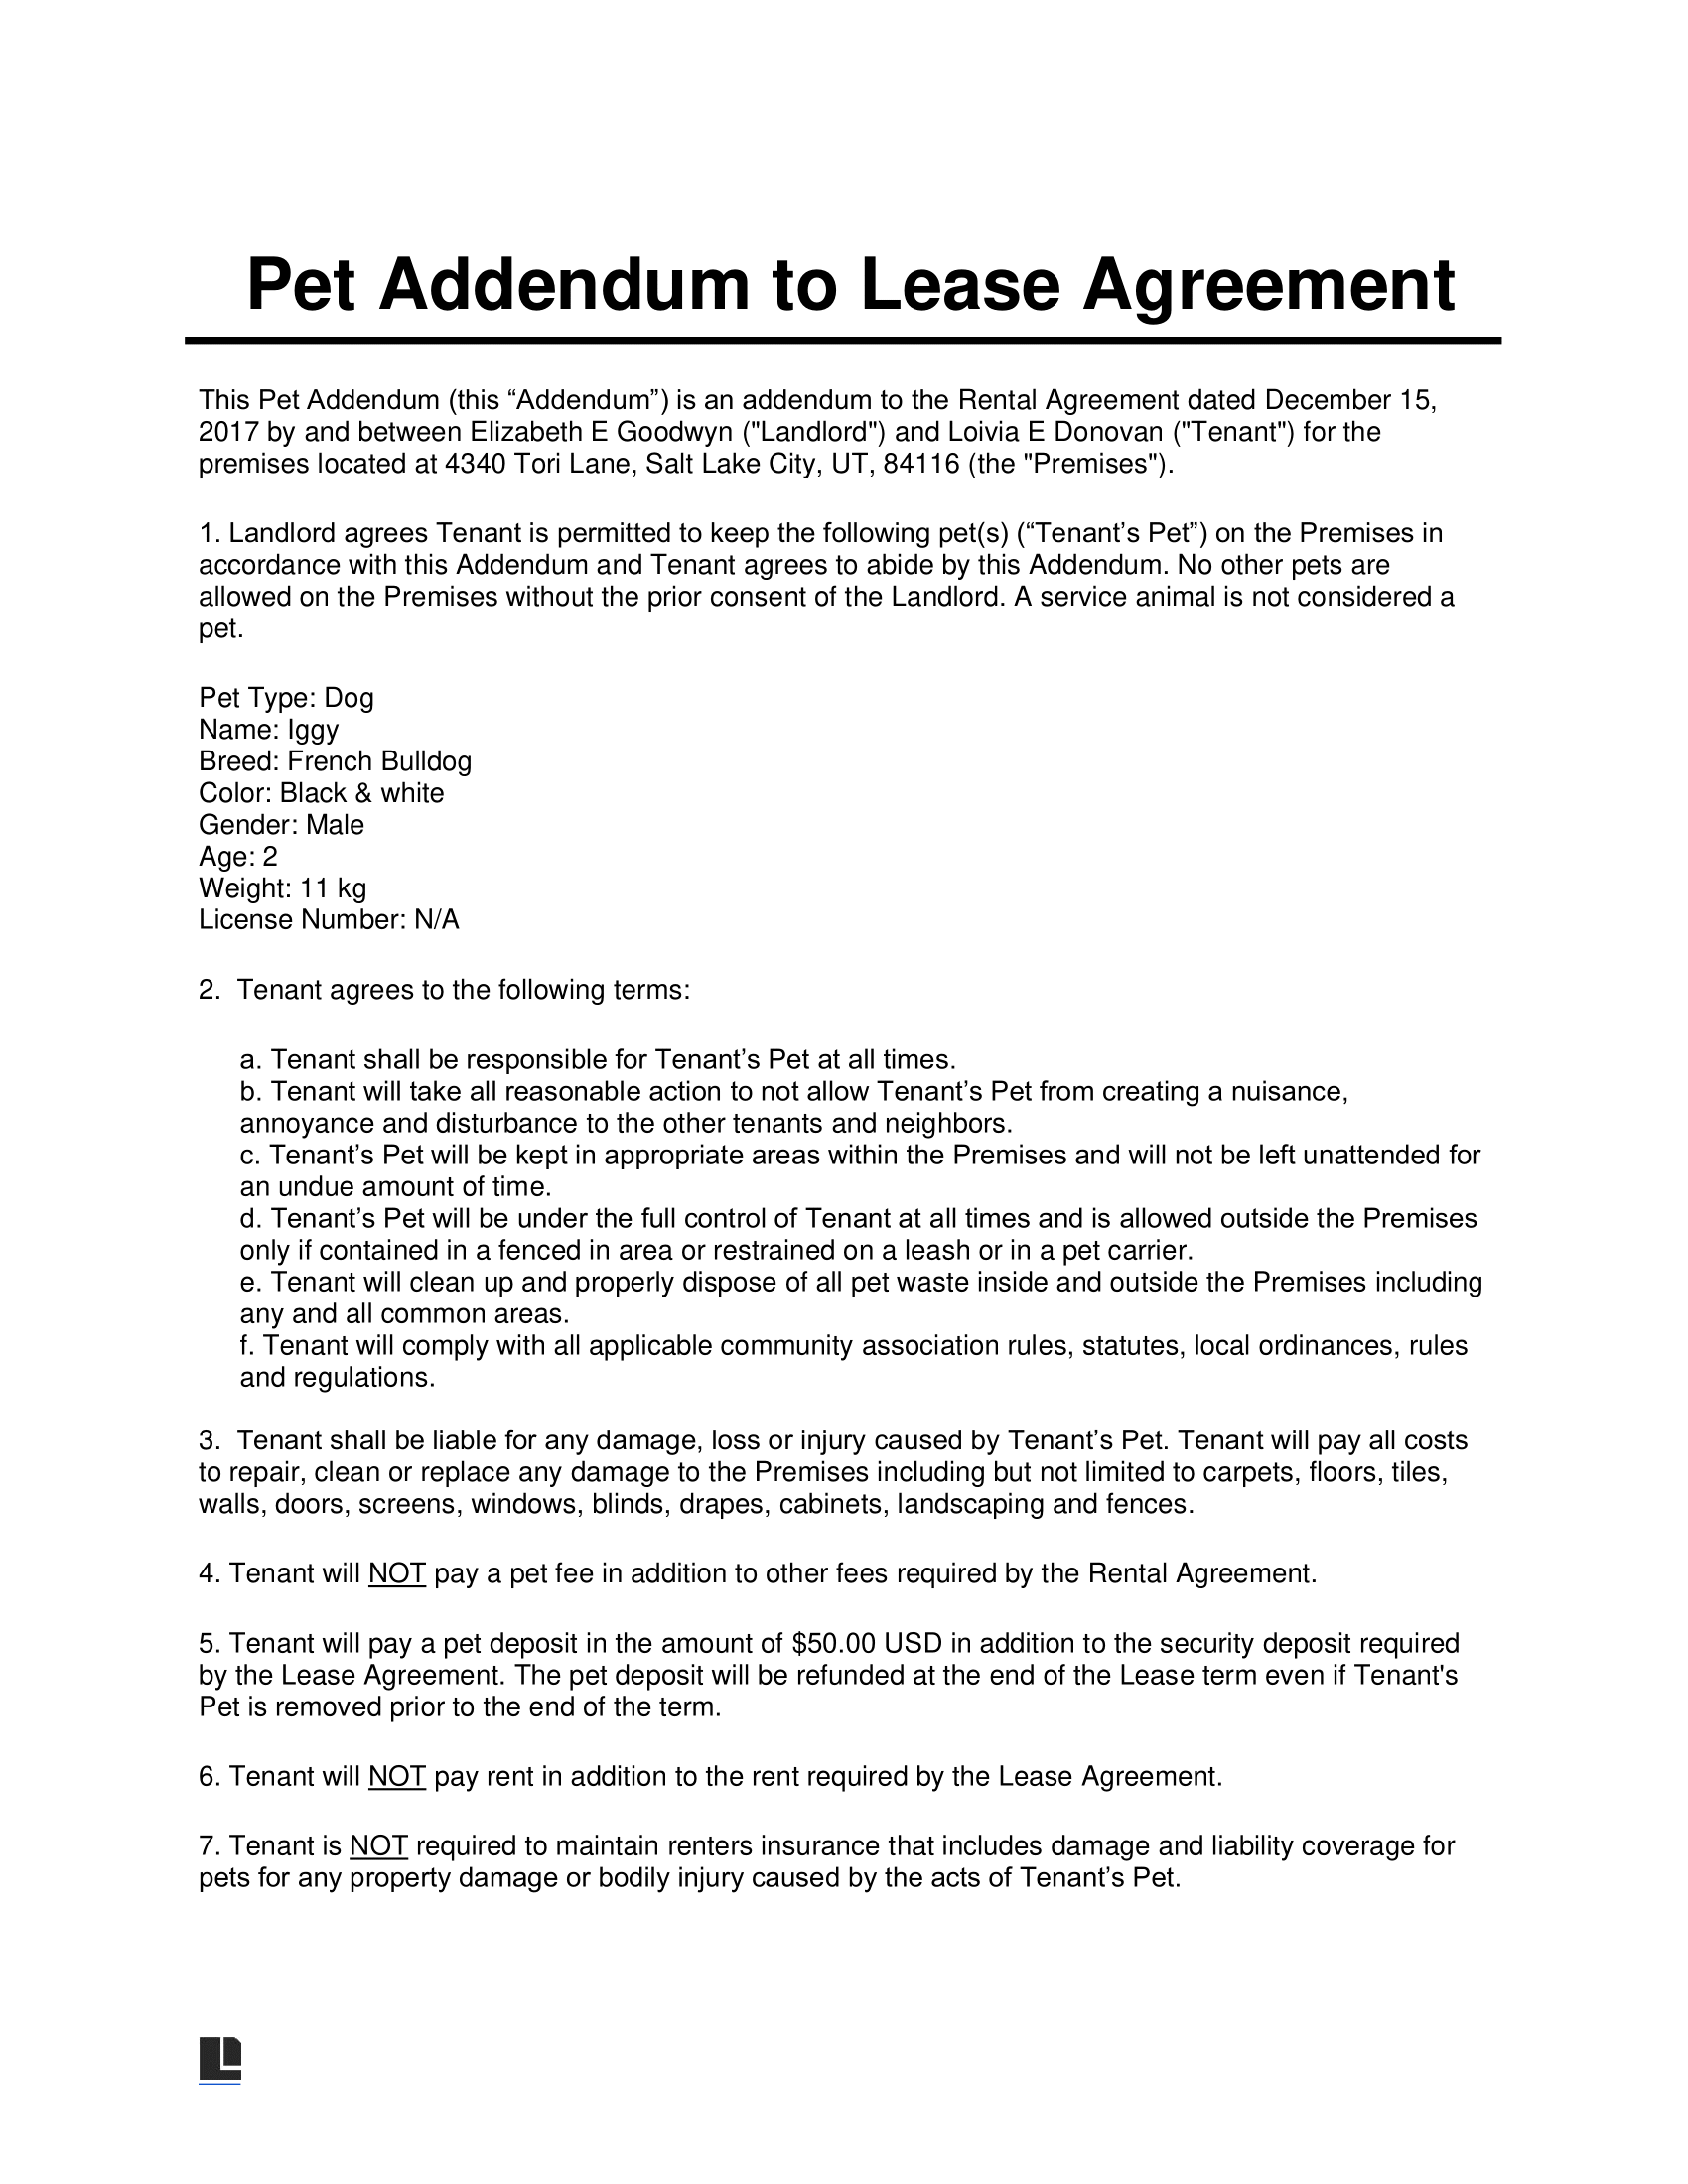 pet addendum lease agreement sample